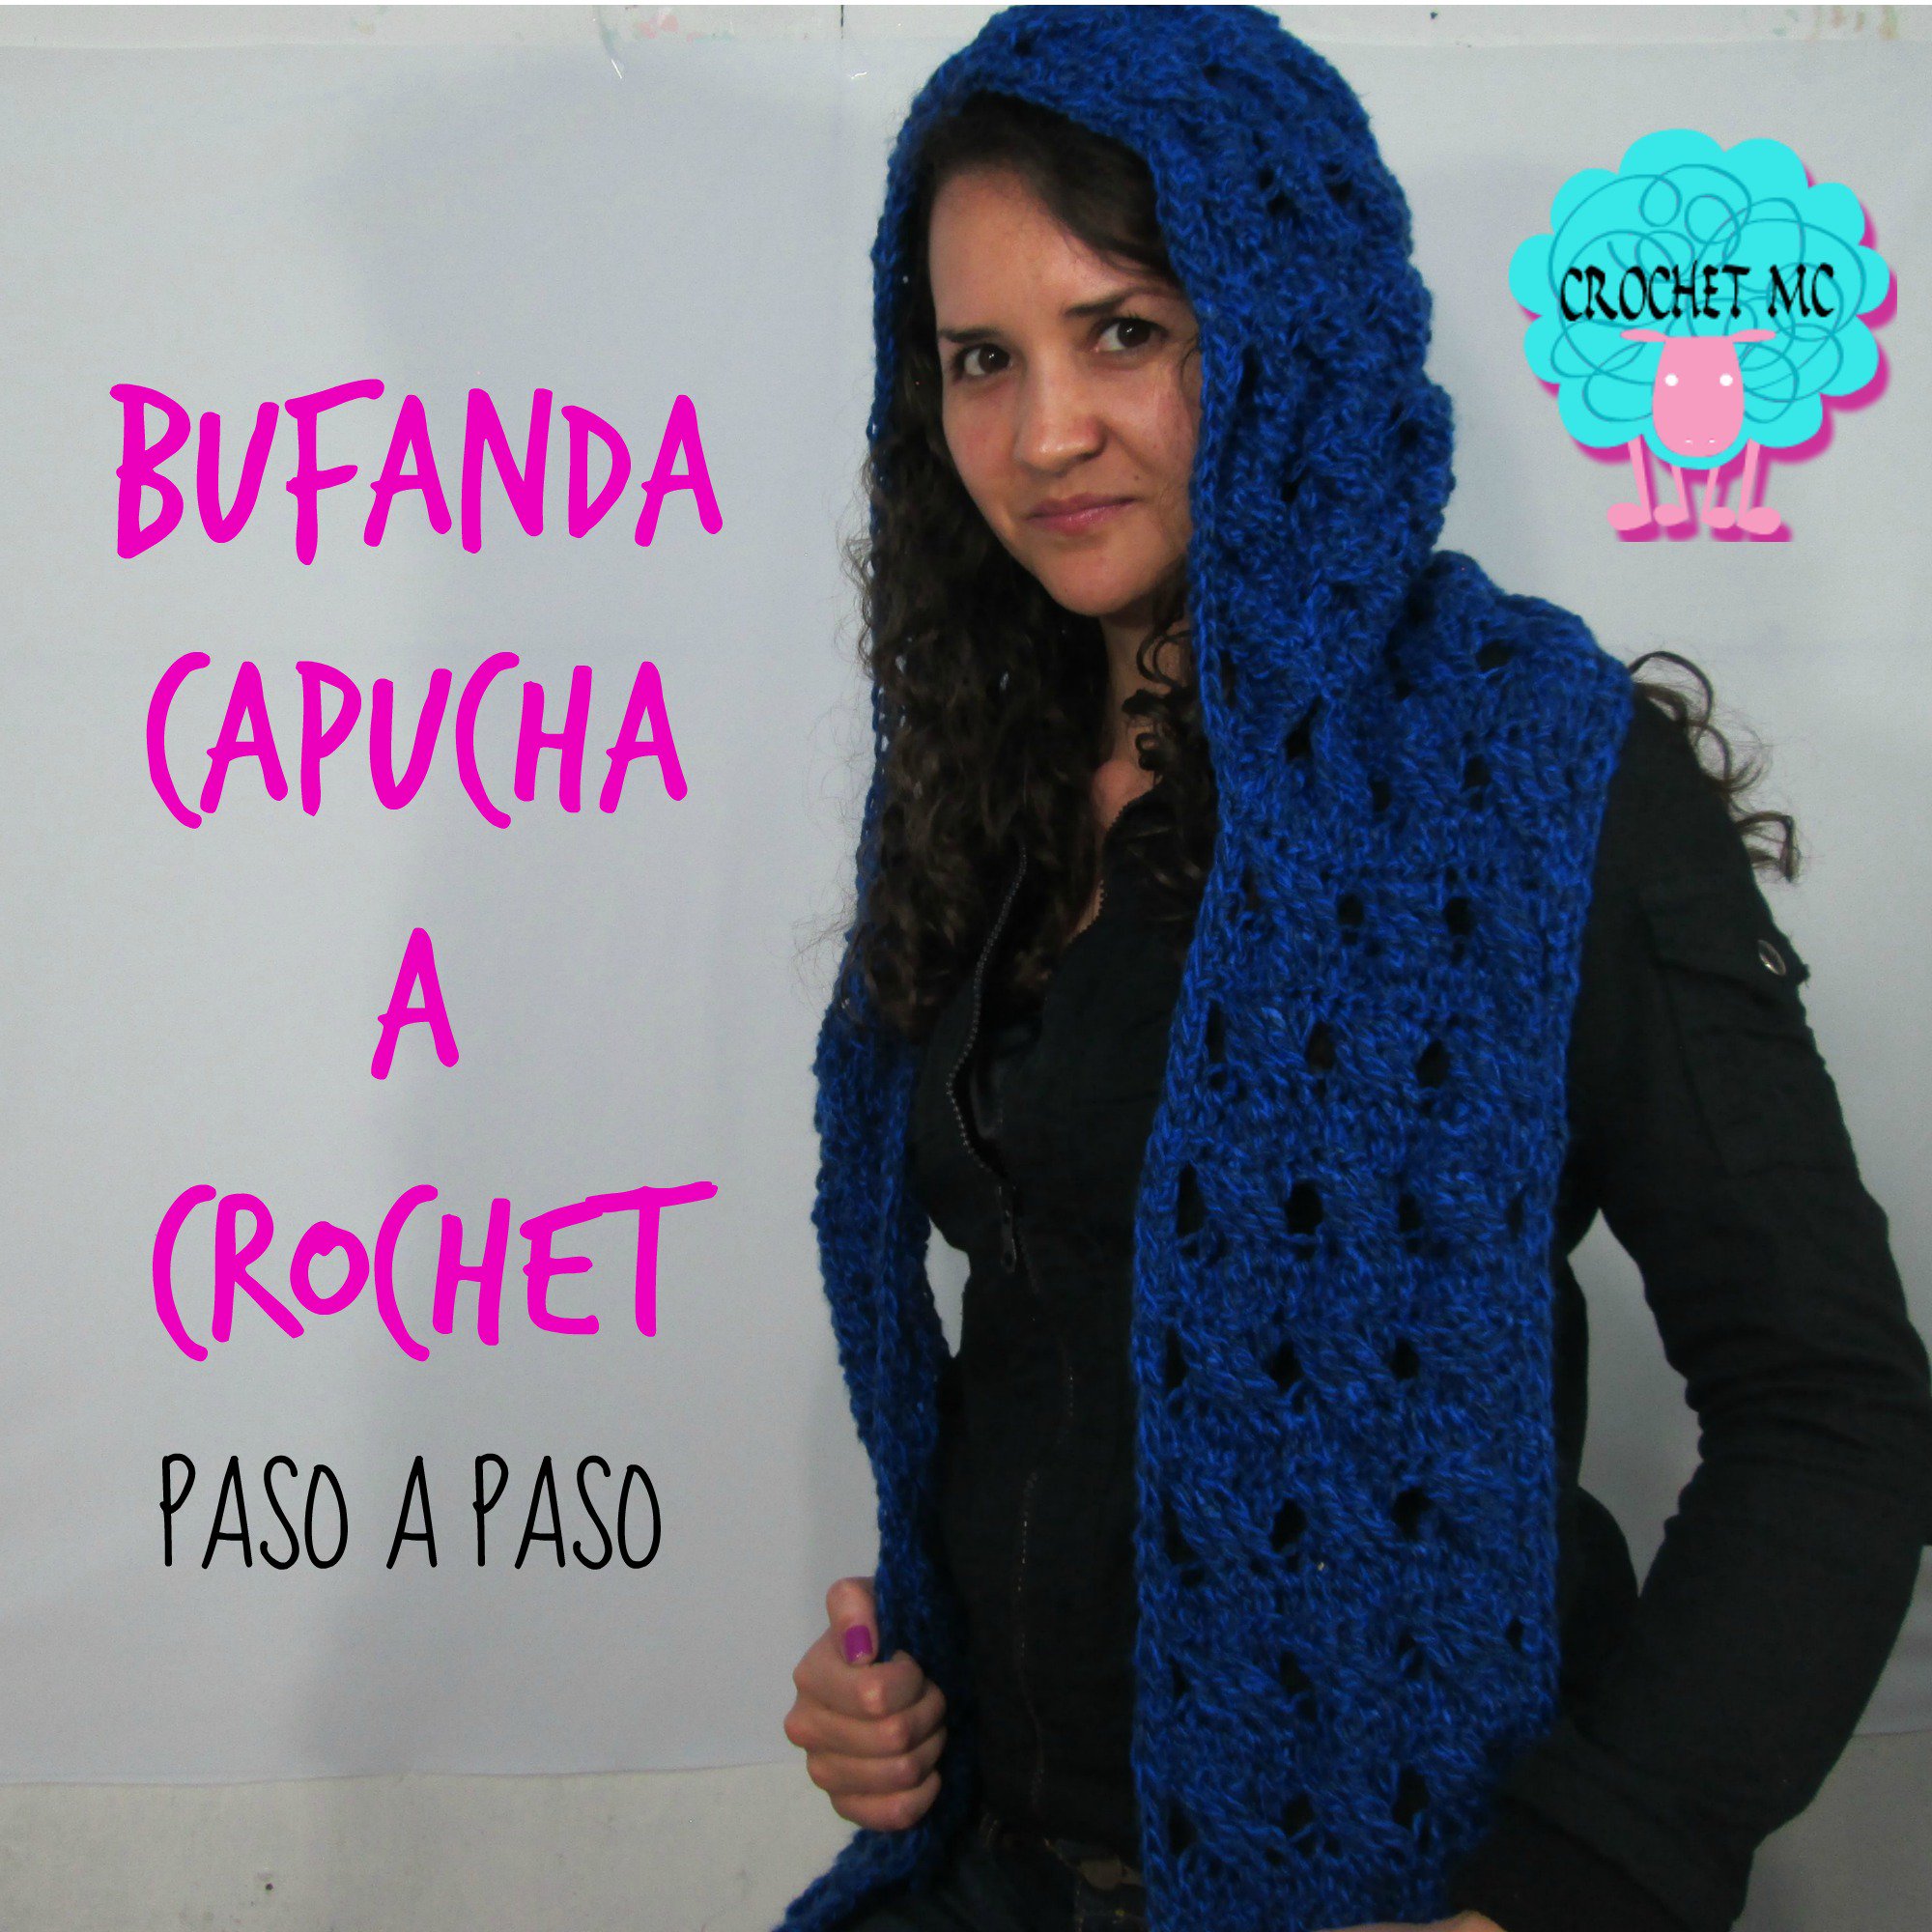 Crochet mc on Twitter: "#bufanda con #capucha a #crochet a paso aquí https://t.co/BwImtoFQys / Twitter